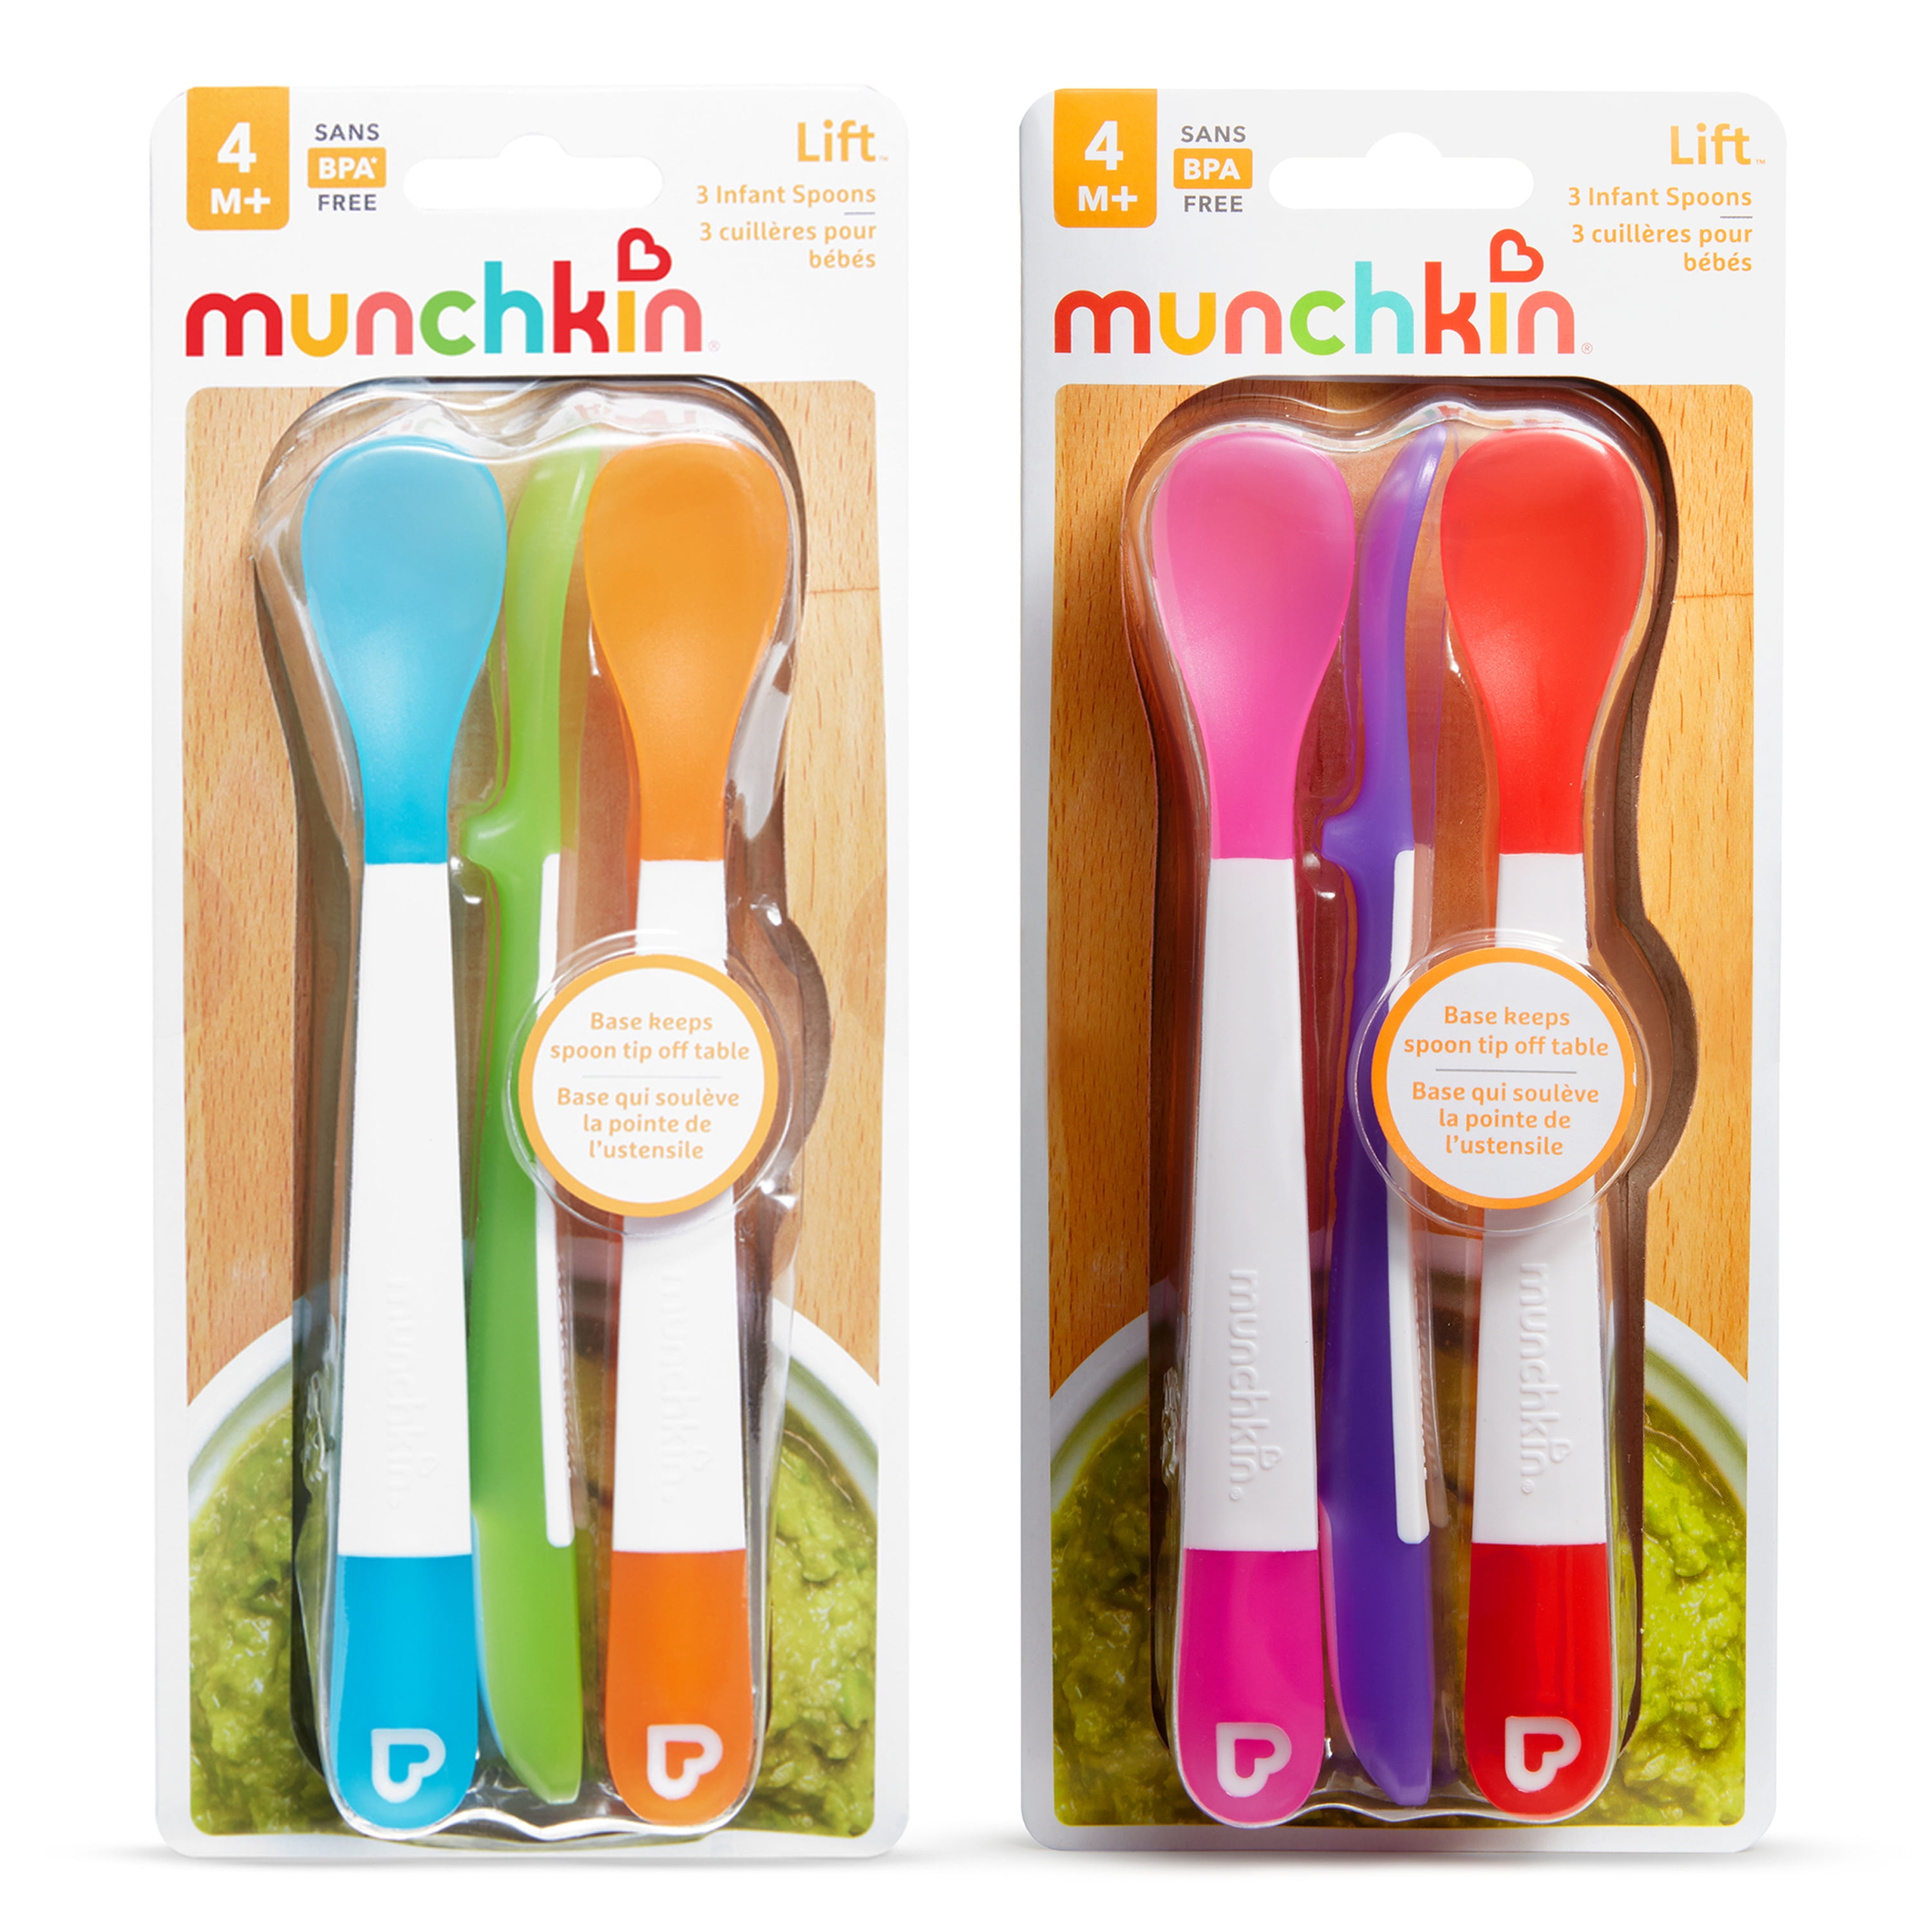 Munchkin Soft Tip Infant Spoon set, Multi color, 6 pack - Assorted Pre